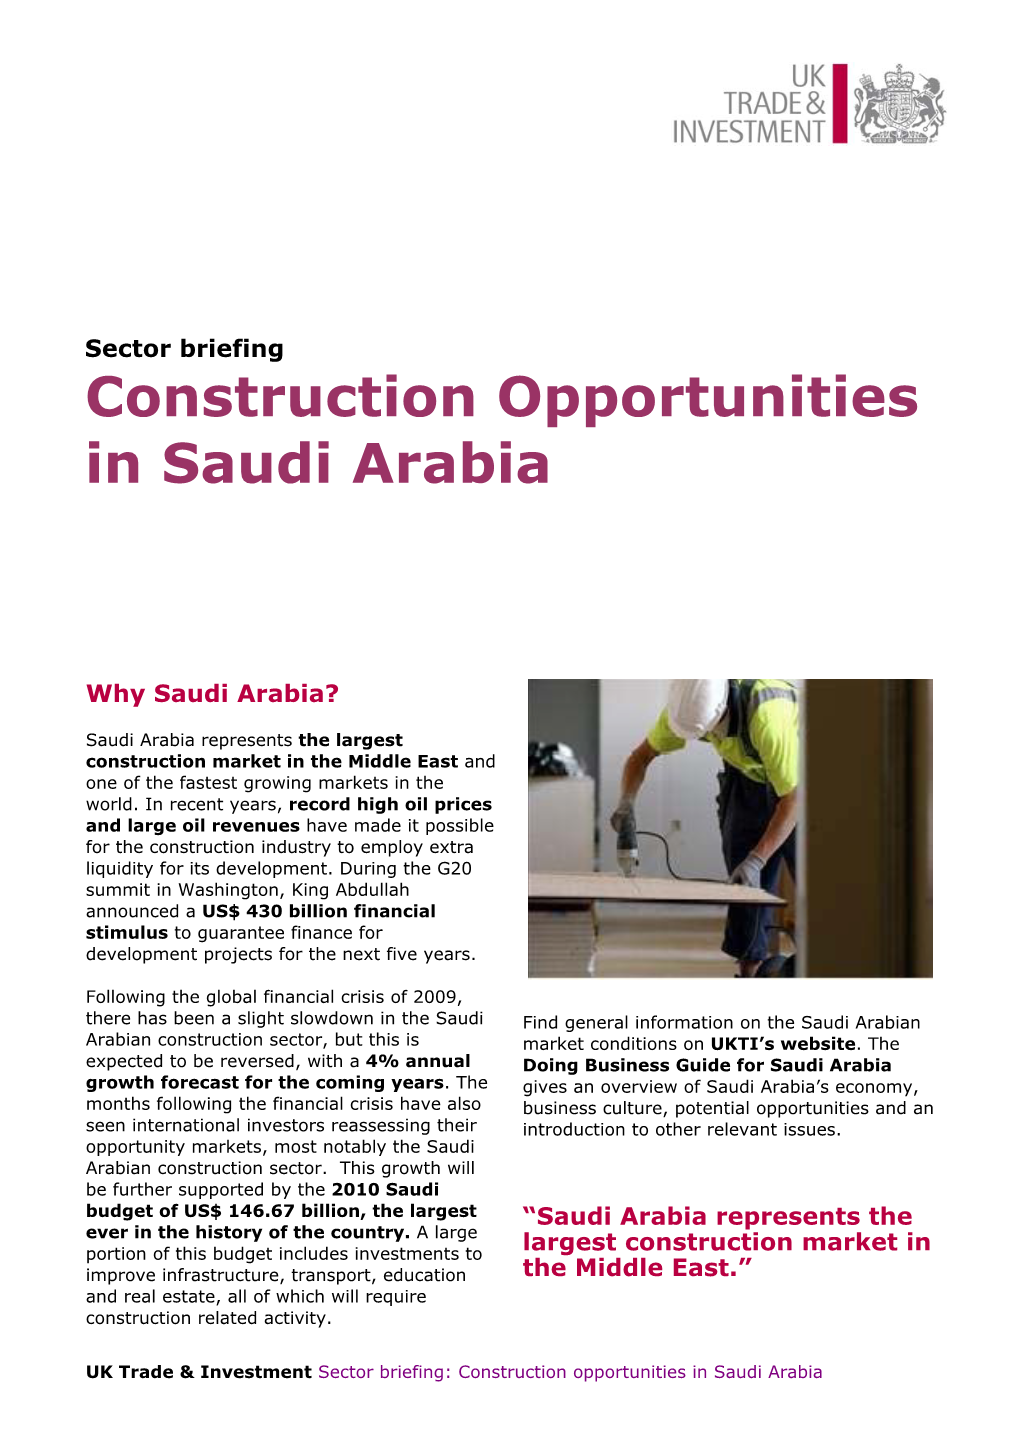 Construction Sector in Saudi Arabia Briefing